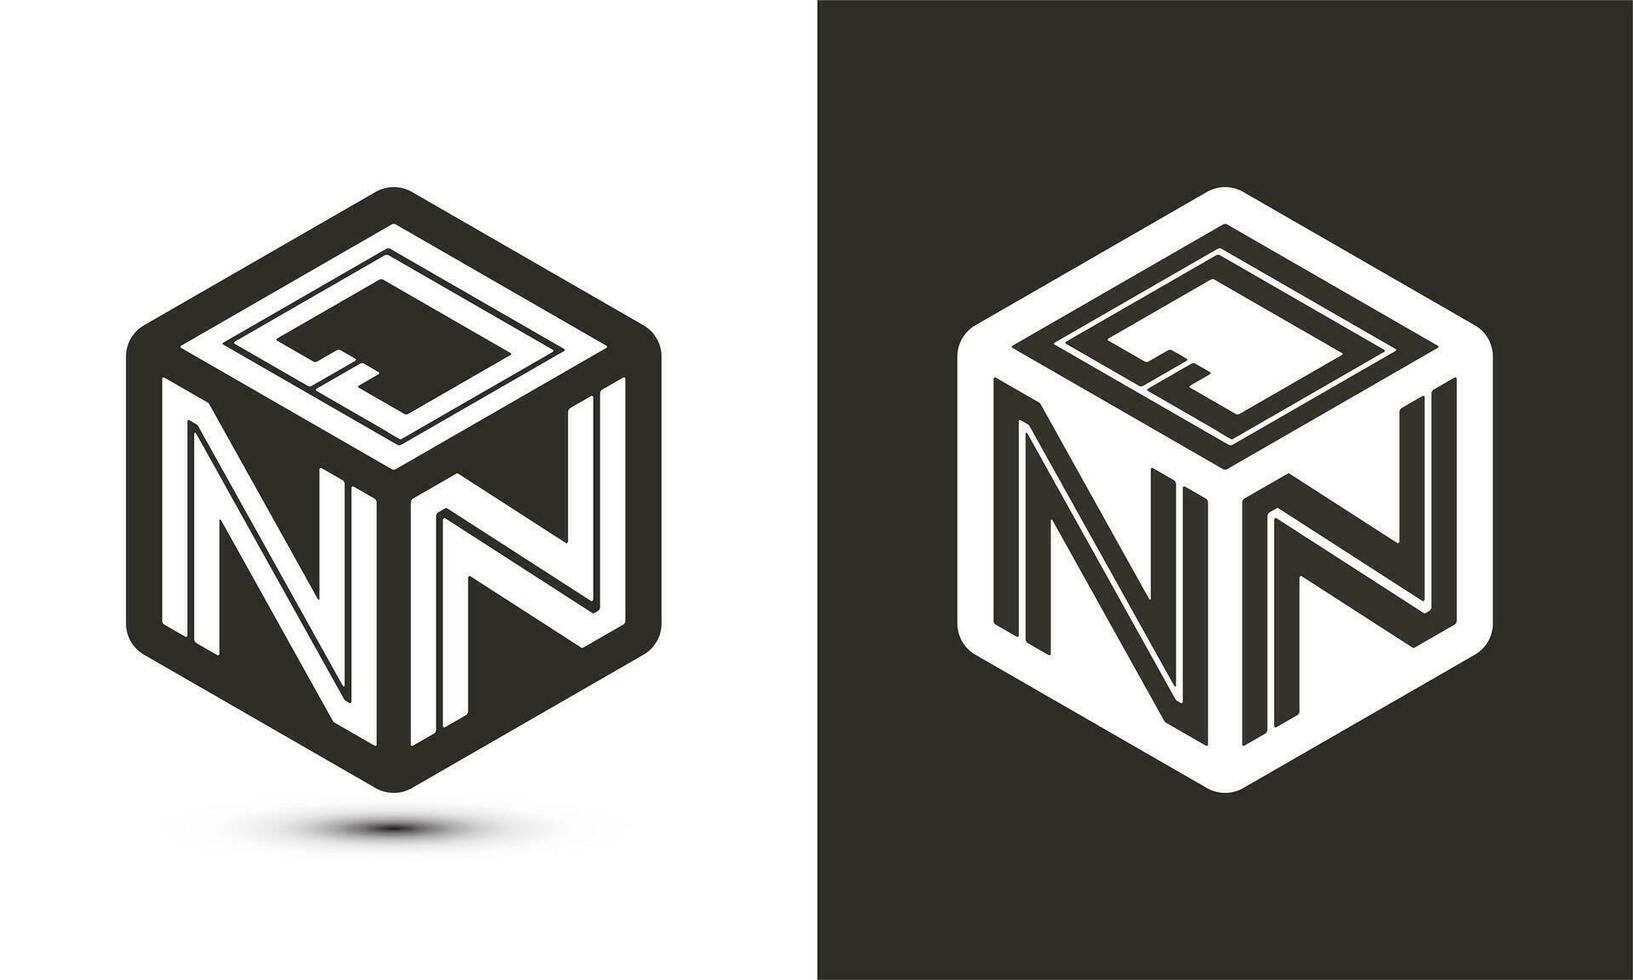 qnn letra logo diseño con ilustrador cubo logo, vector logo moderno alfabeto fuente superposición estilo.